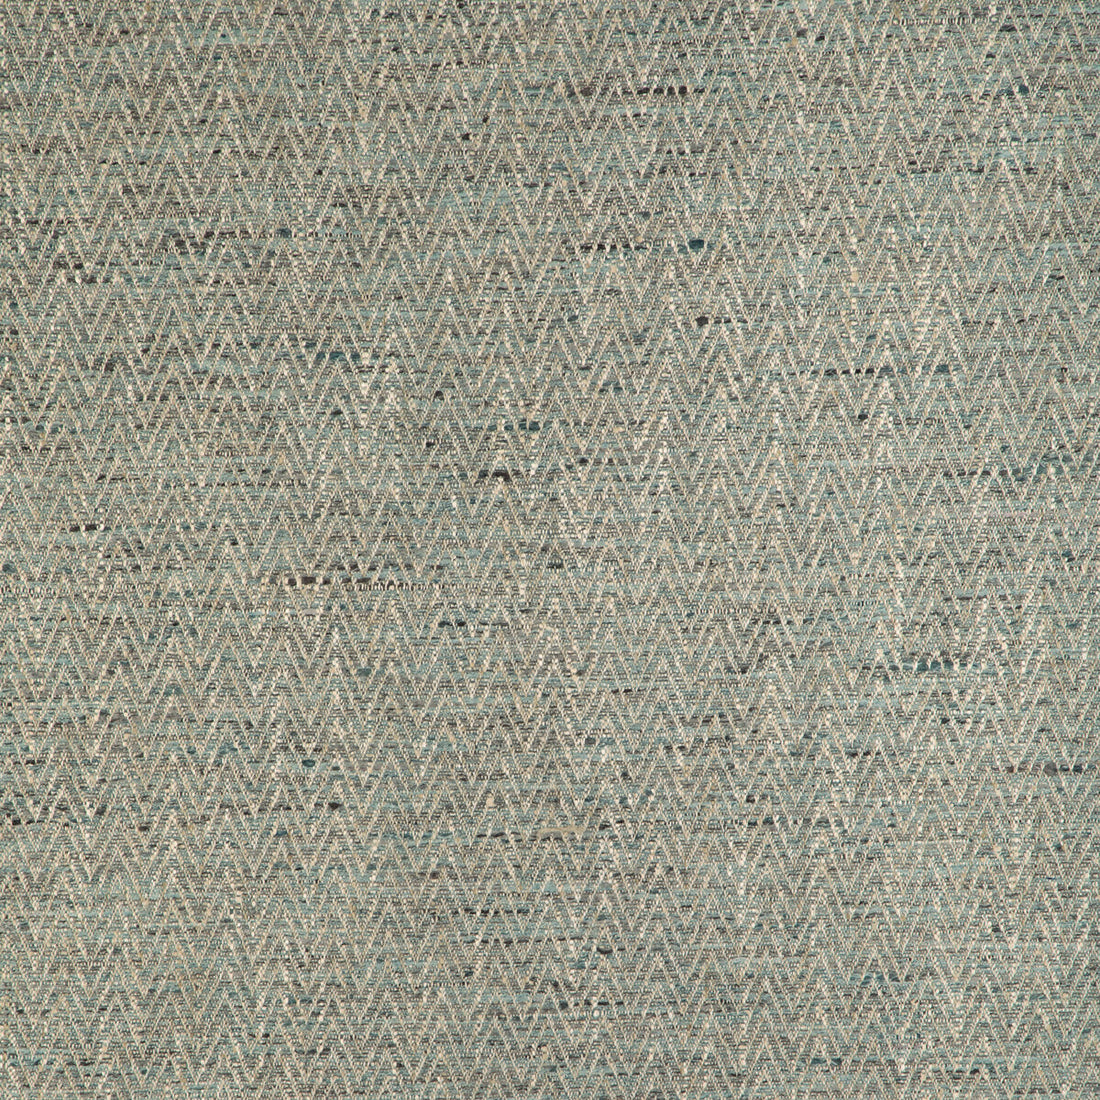 Kravet Smart fabric in 34092-1311 color - pattern 34092.1311.0 - by Kravet Smart